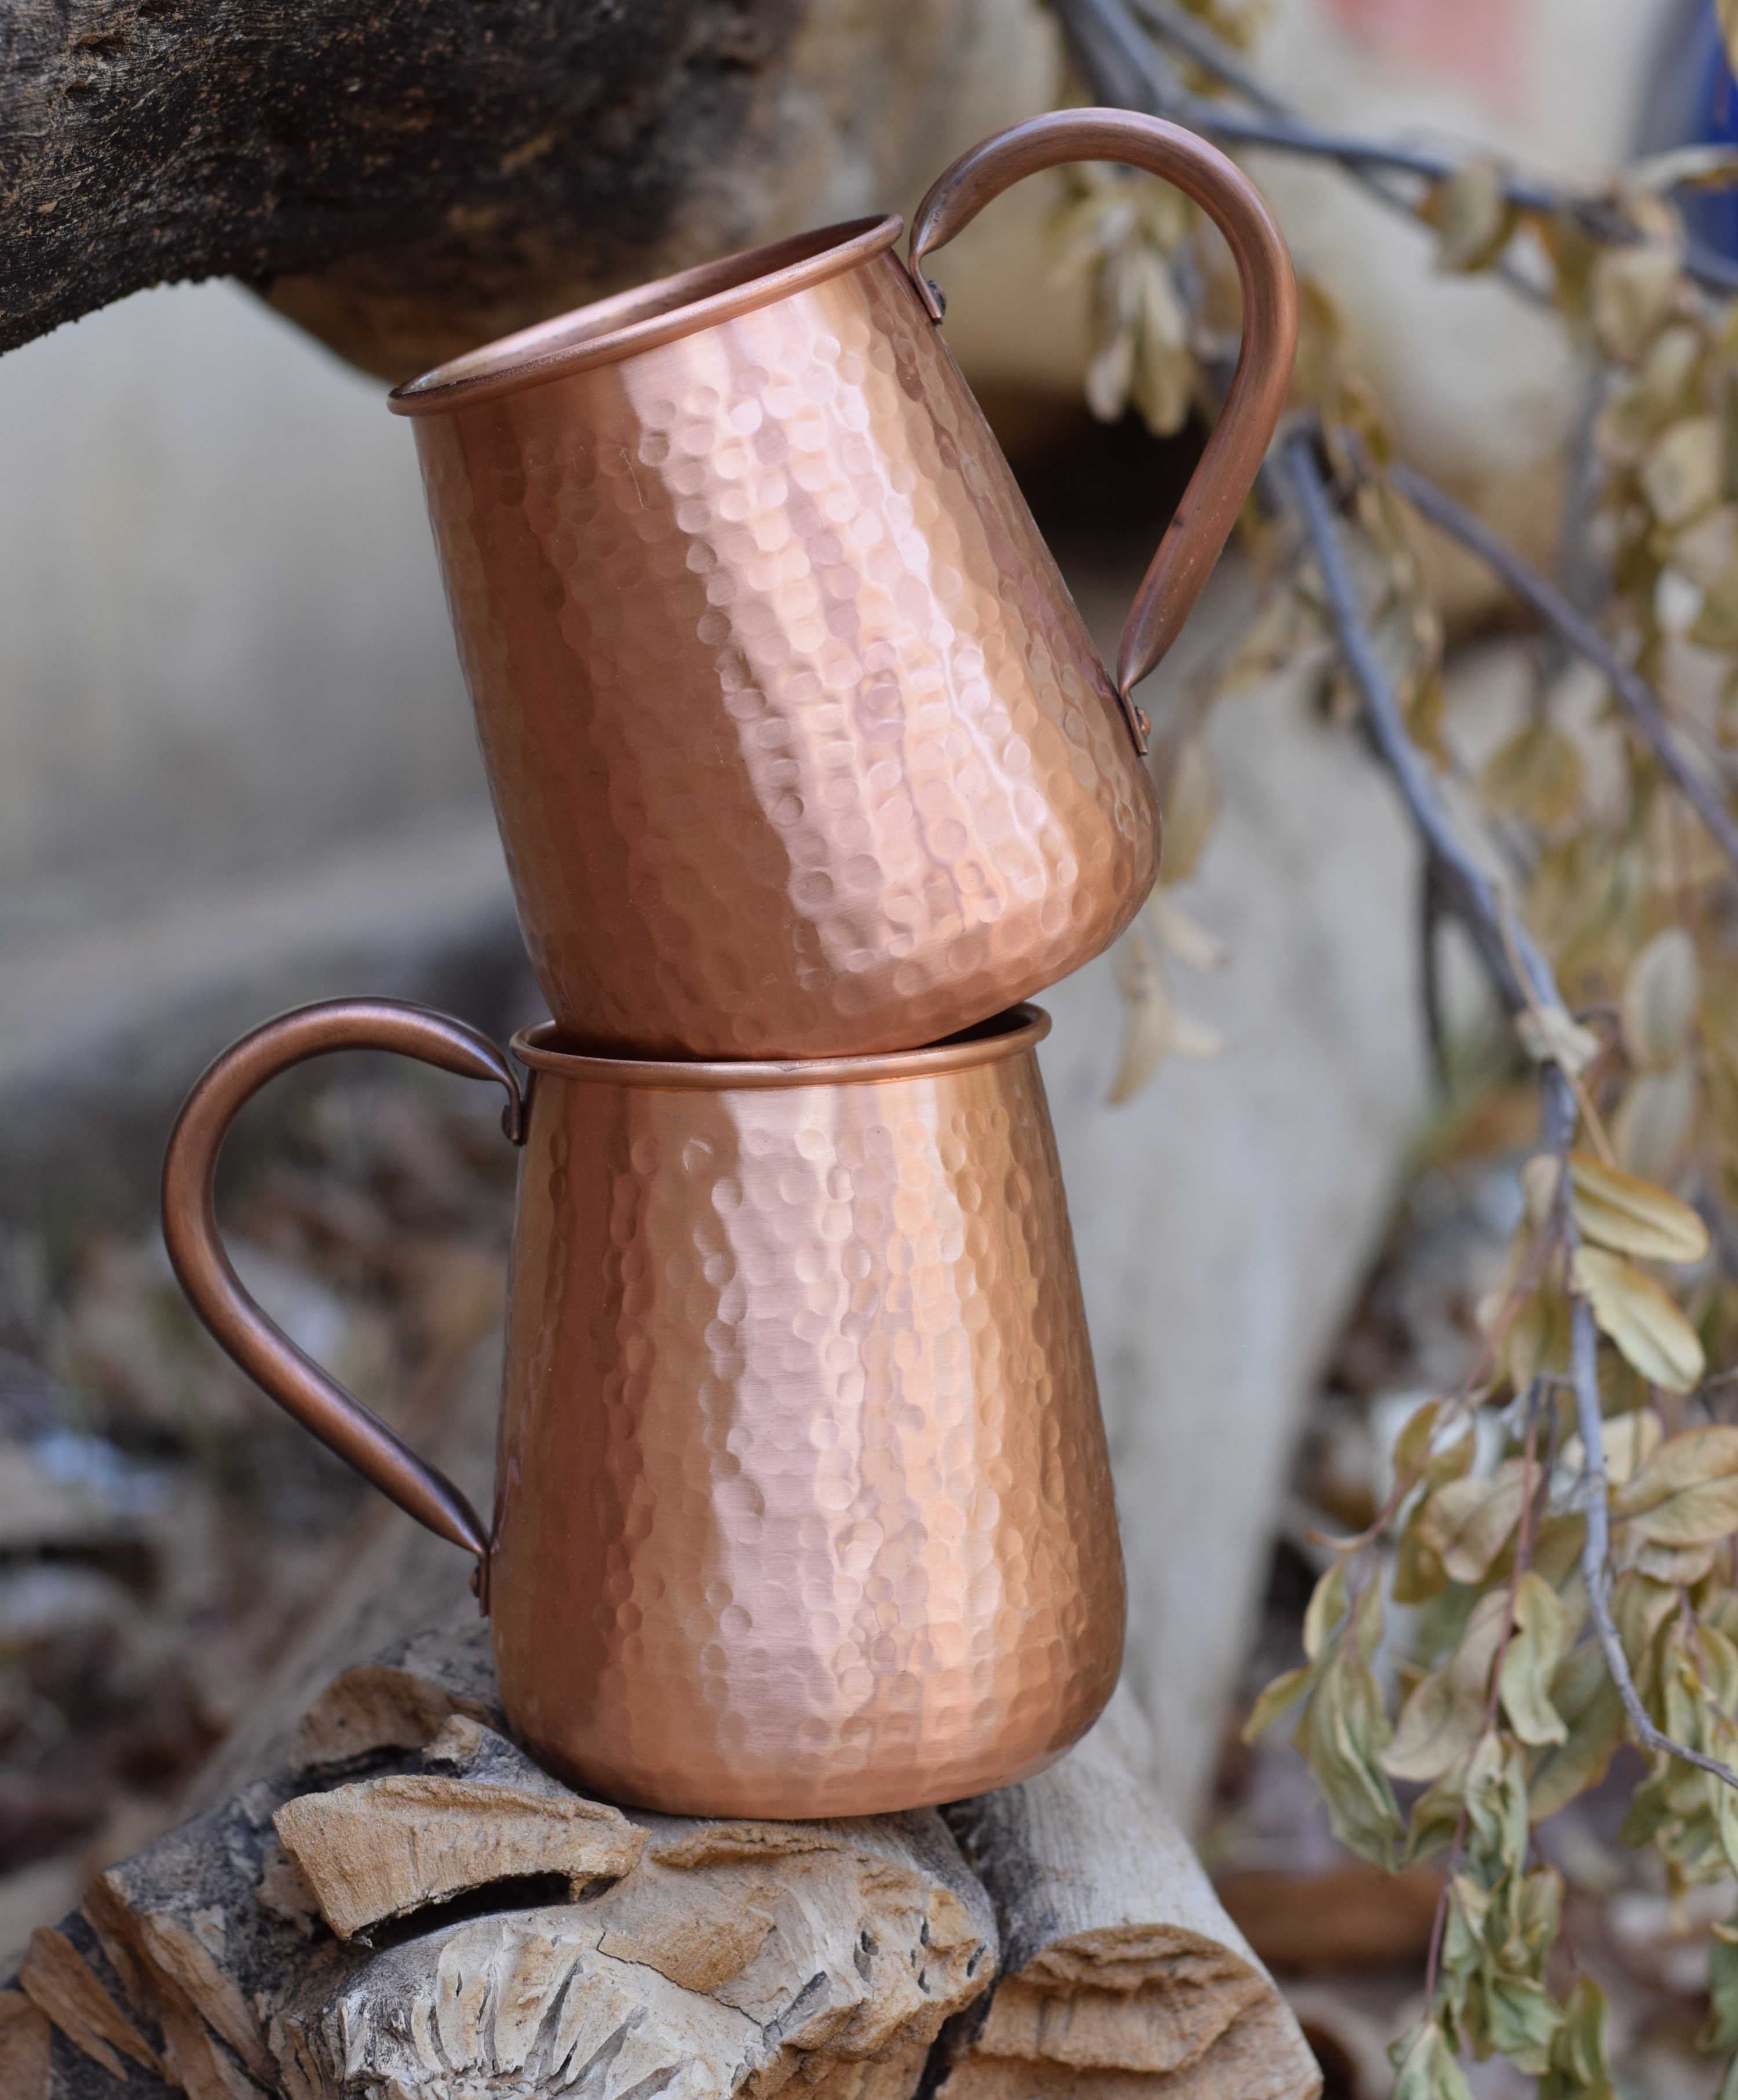 Copperworks Moscow Mule Copper Mug (12 oz.) – Copperworks Distilling Company